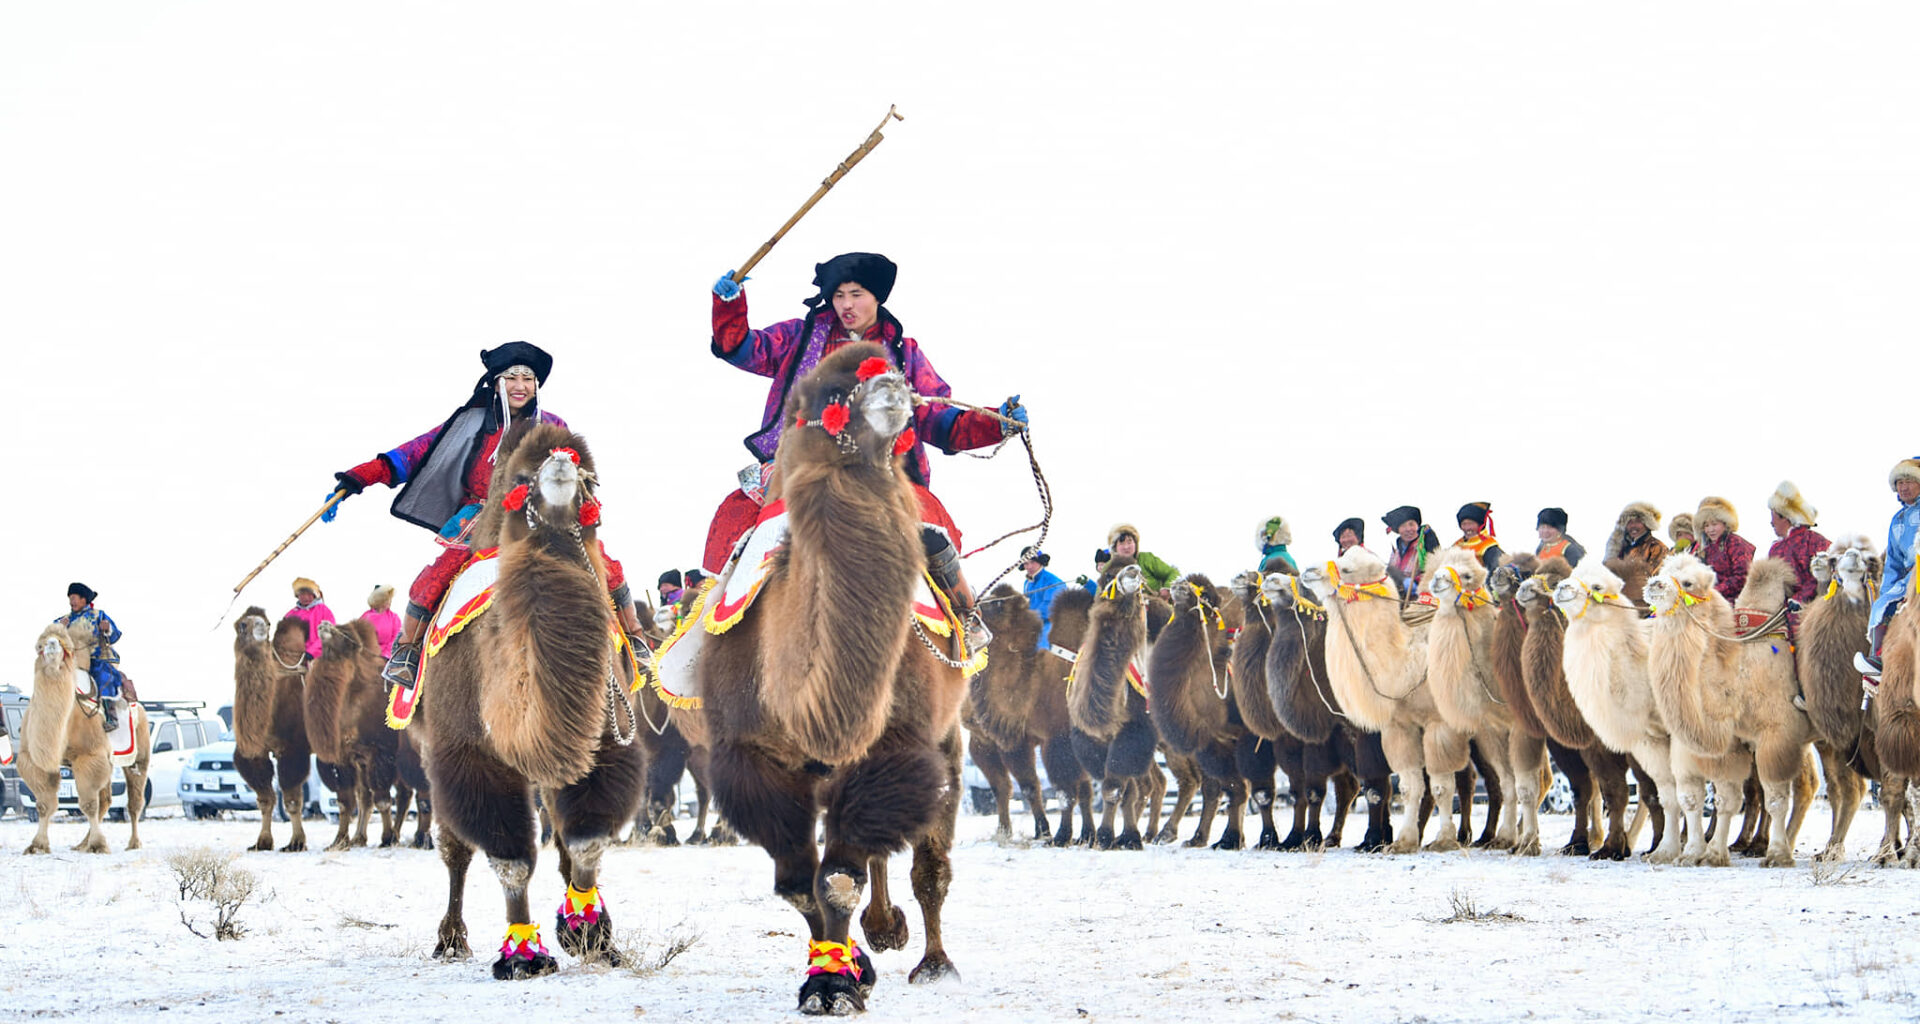 Mongolia winter camel festival